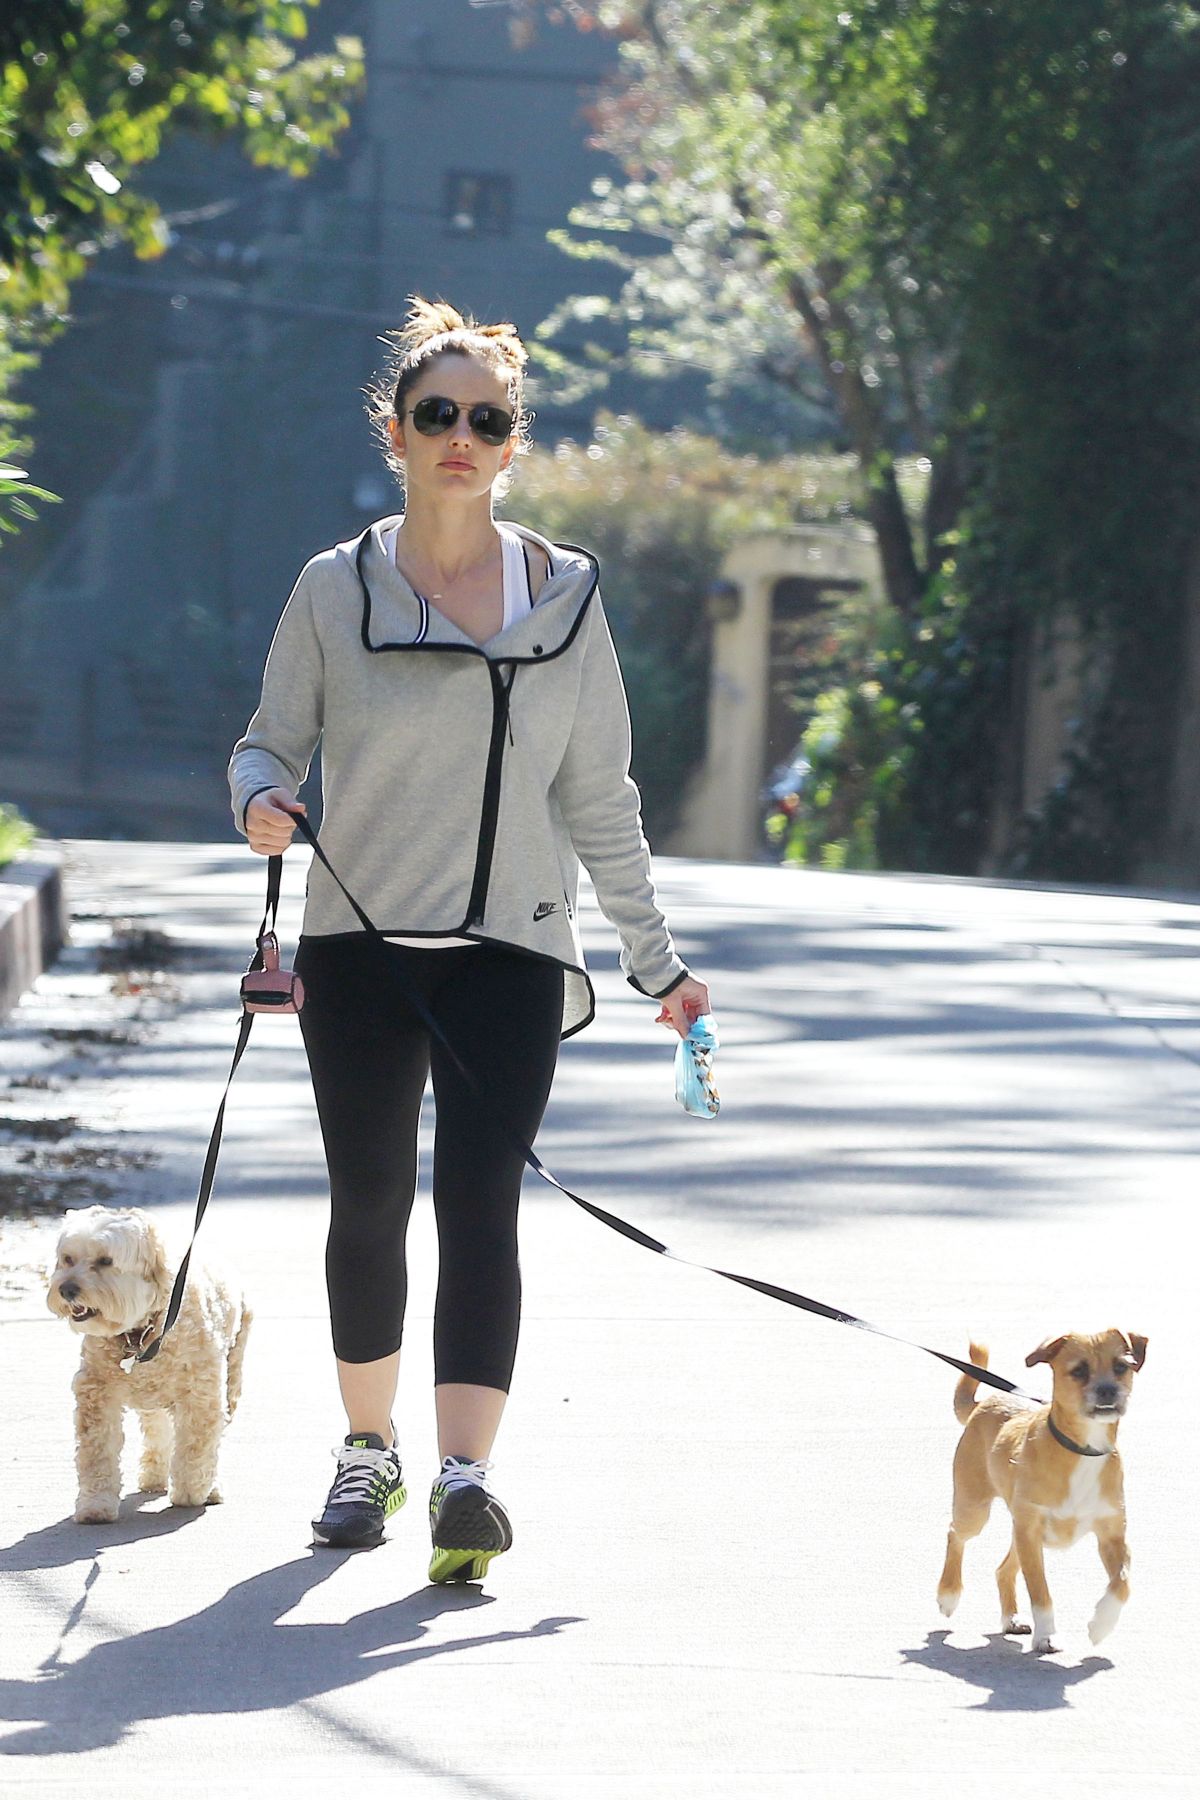 MINKA KELLY in Leggings Walks Her Dogs Out in Hollywood – HawtCelebs